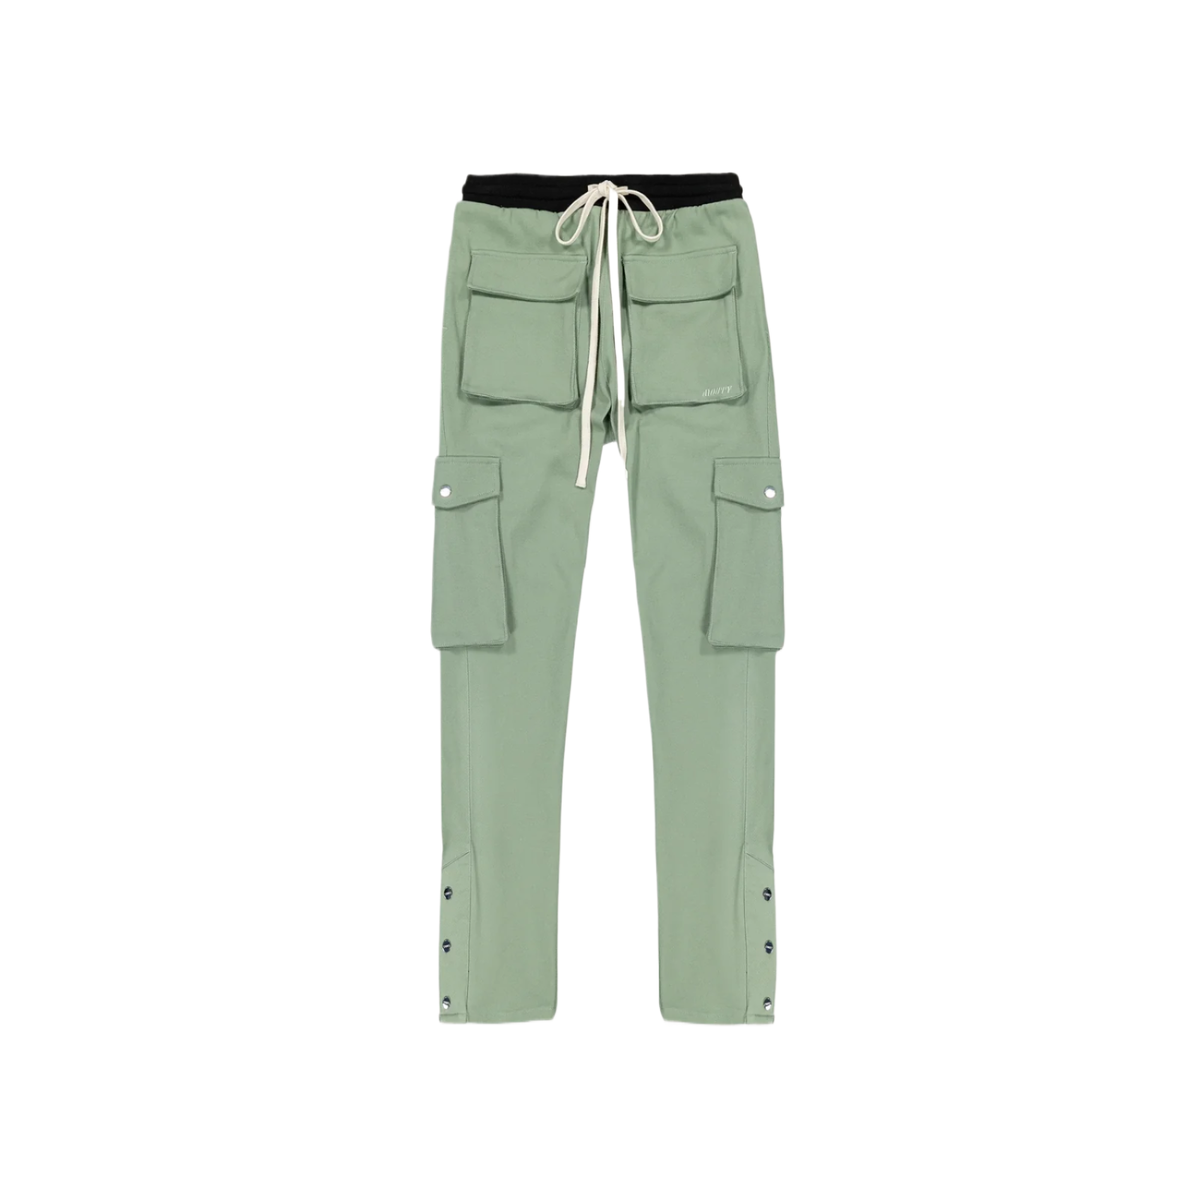 Mouty Sage Green Cargo Pants